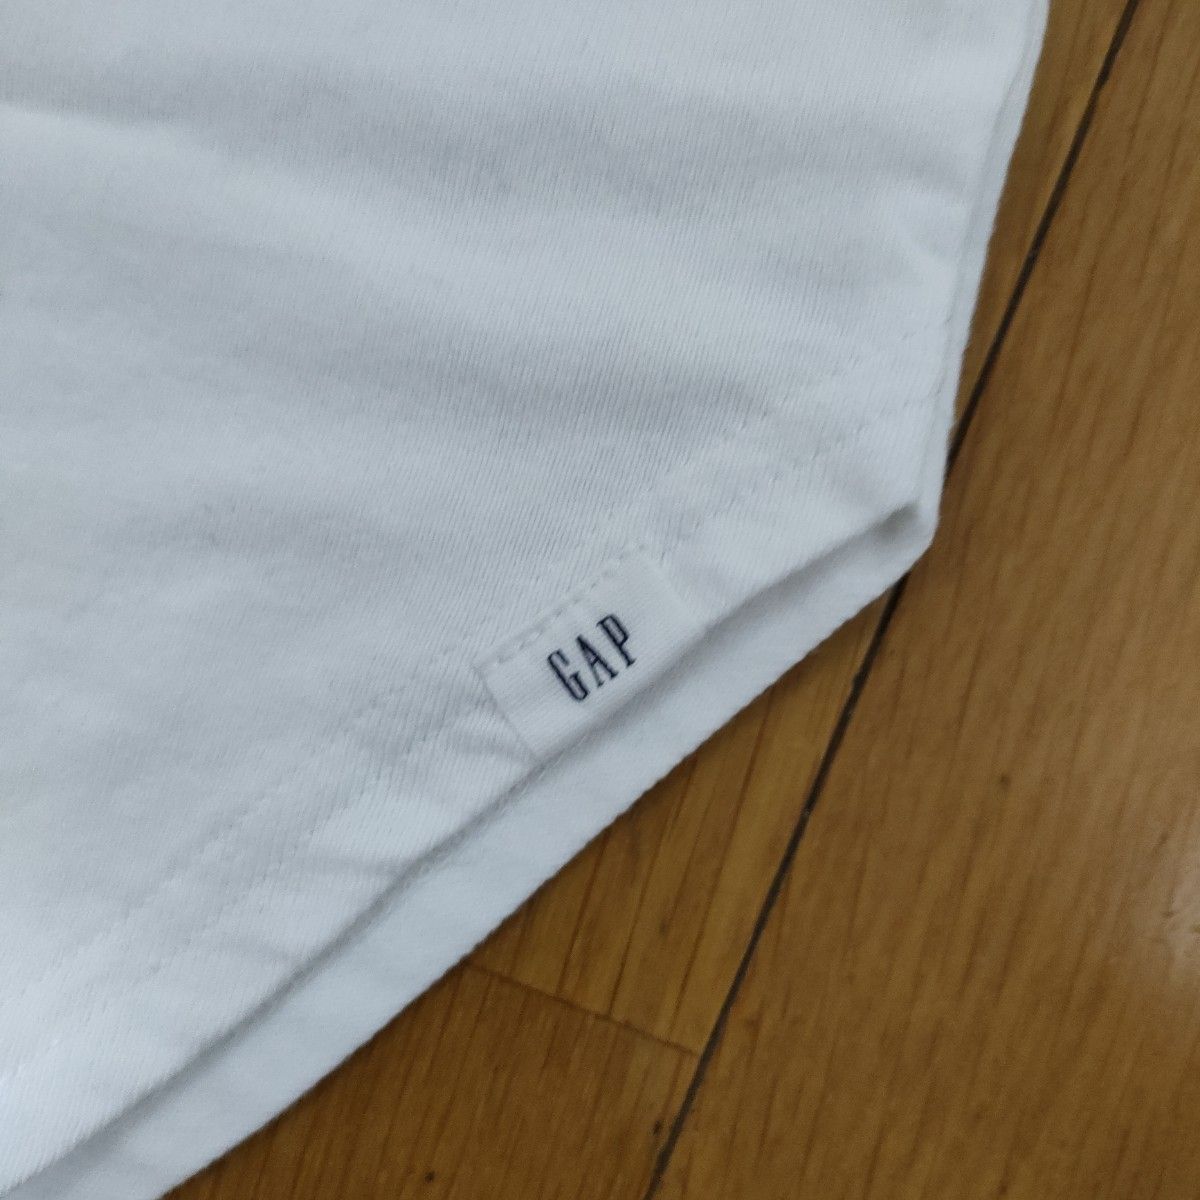 130cm☆GAP白Tシャツ